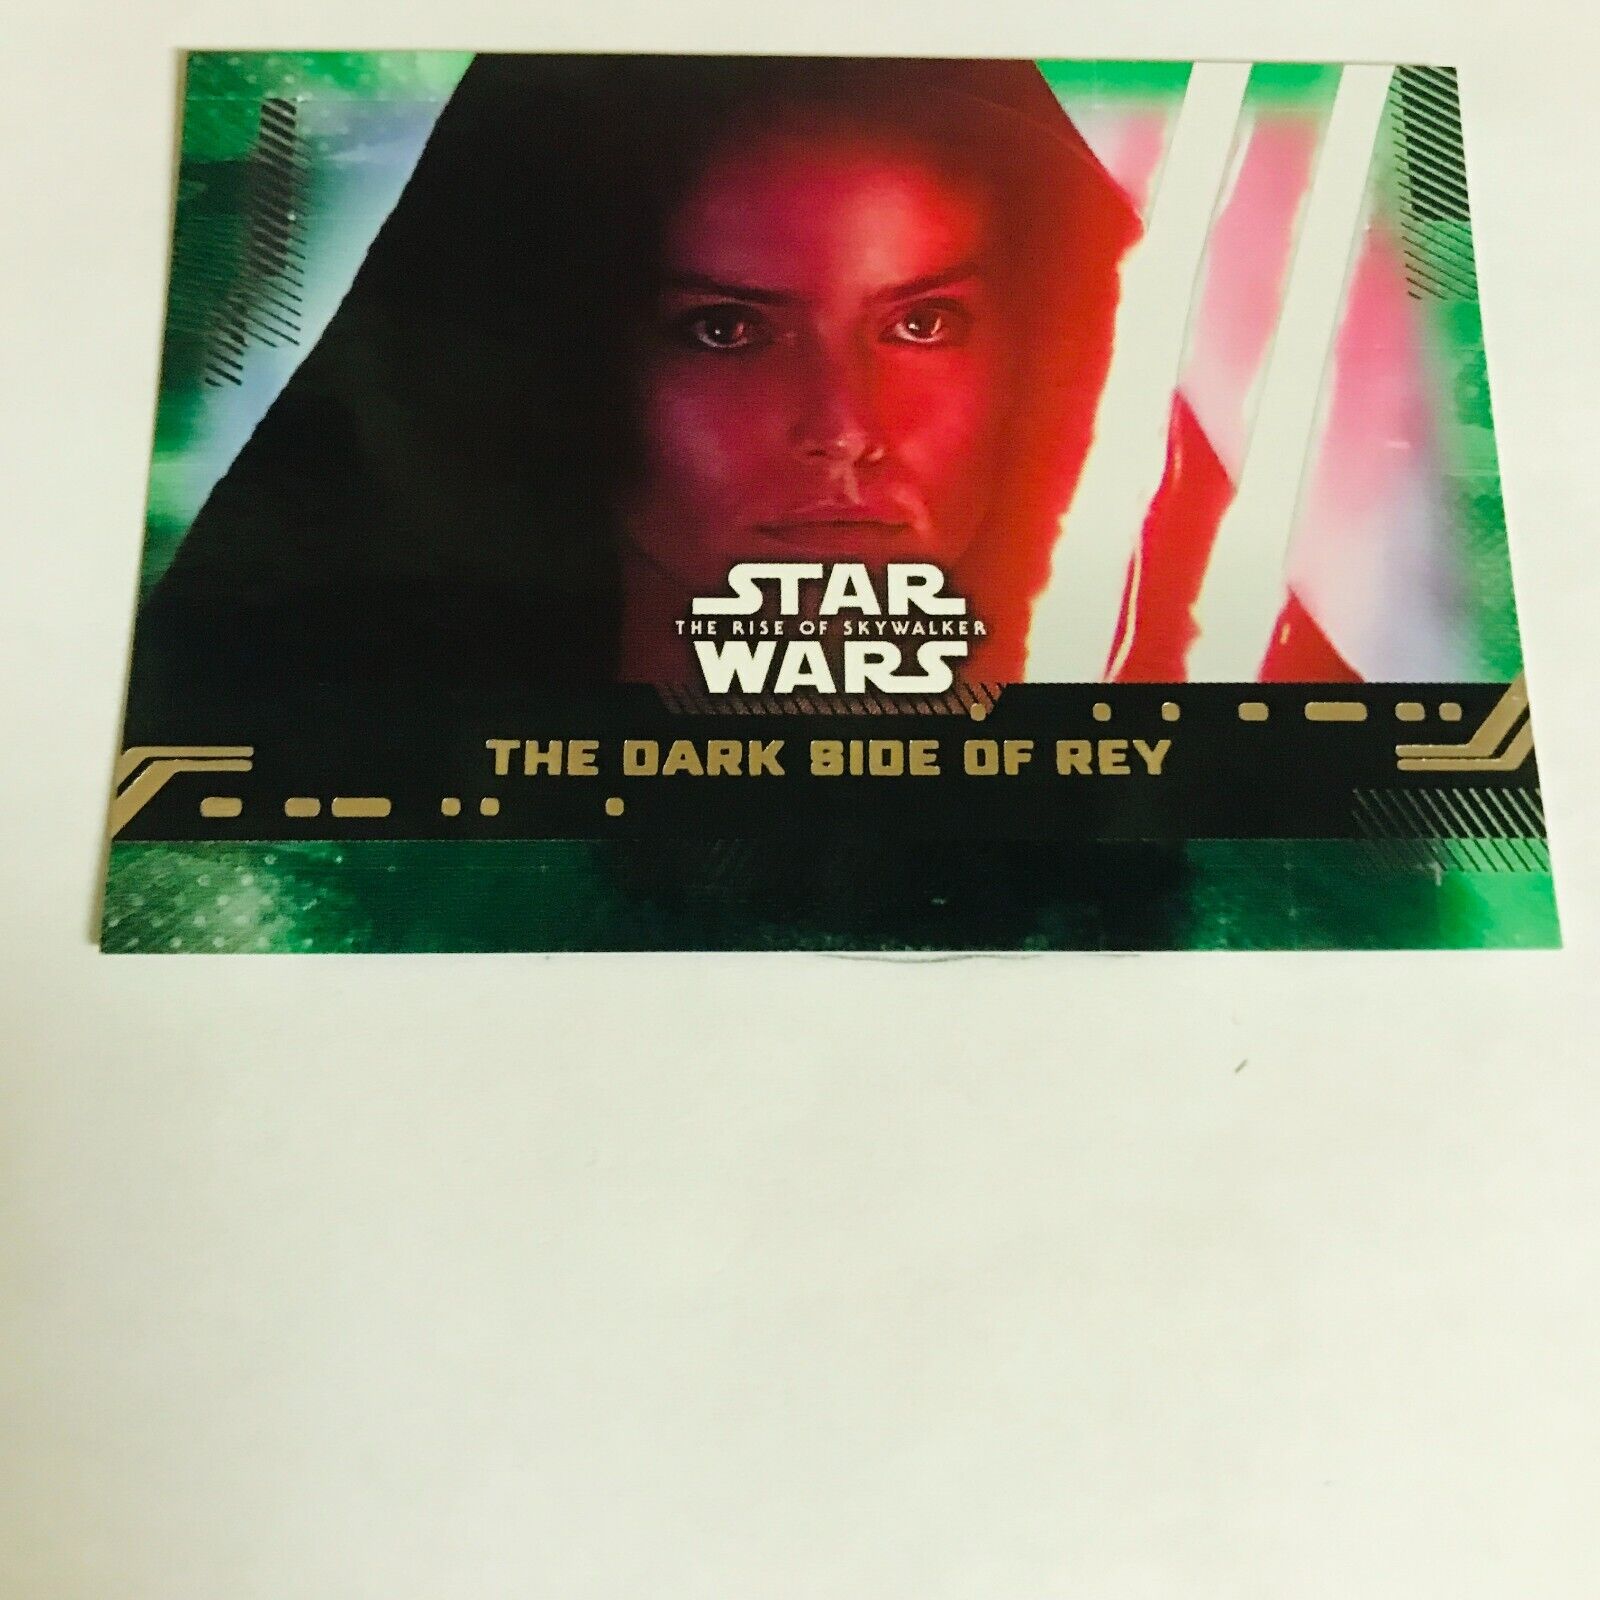 2019 Topps Star Wars The Rise of Skywalker Green Parallel Card #76 Dark Rey